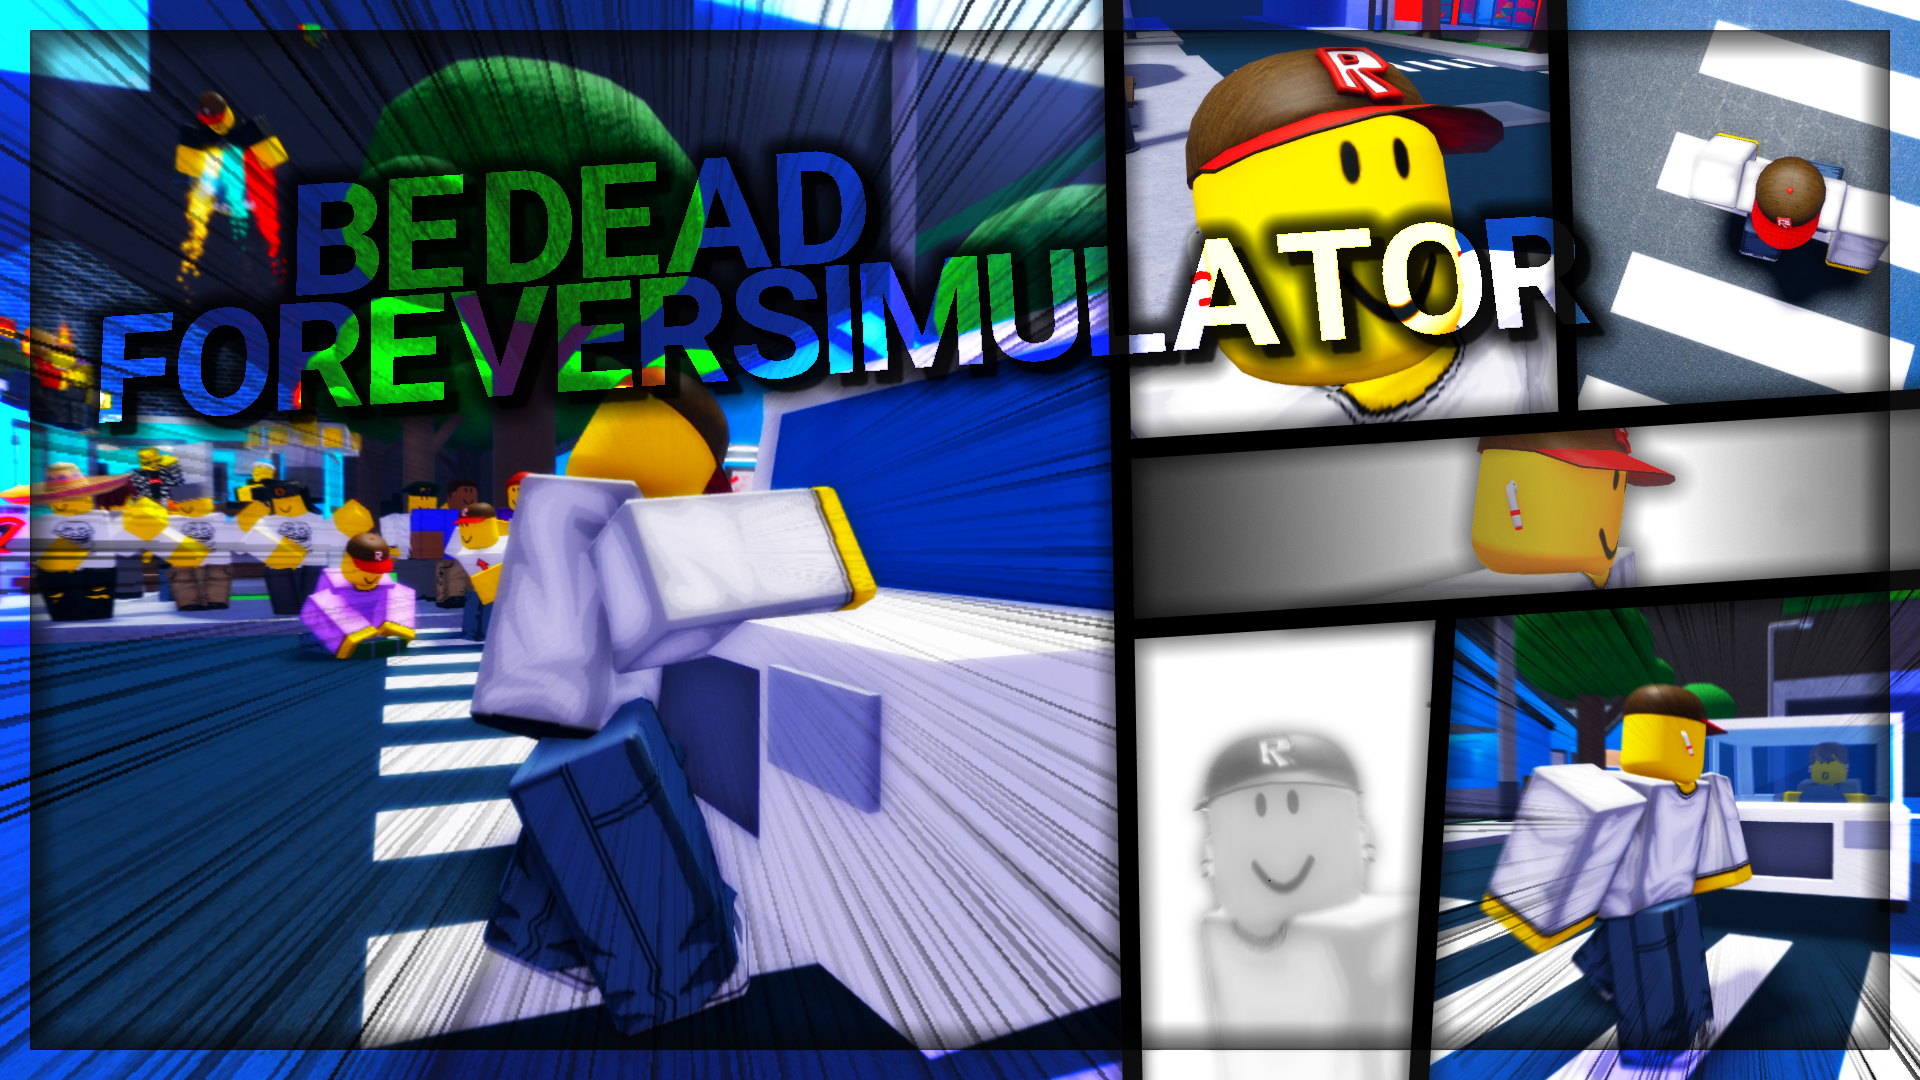 Be Dead Forever Simulator Roblox Wiki Fandom - hack knife simulator roblox